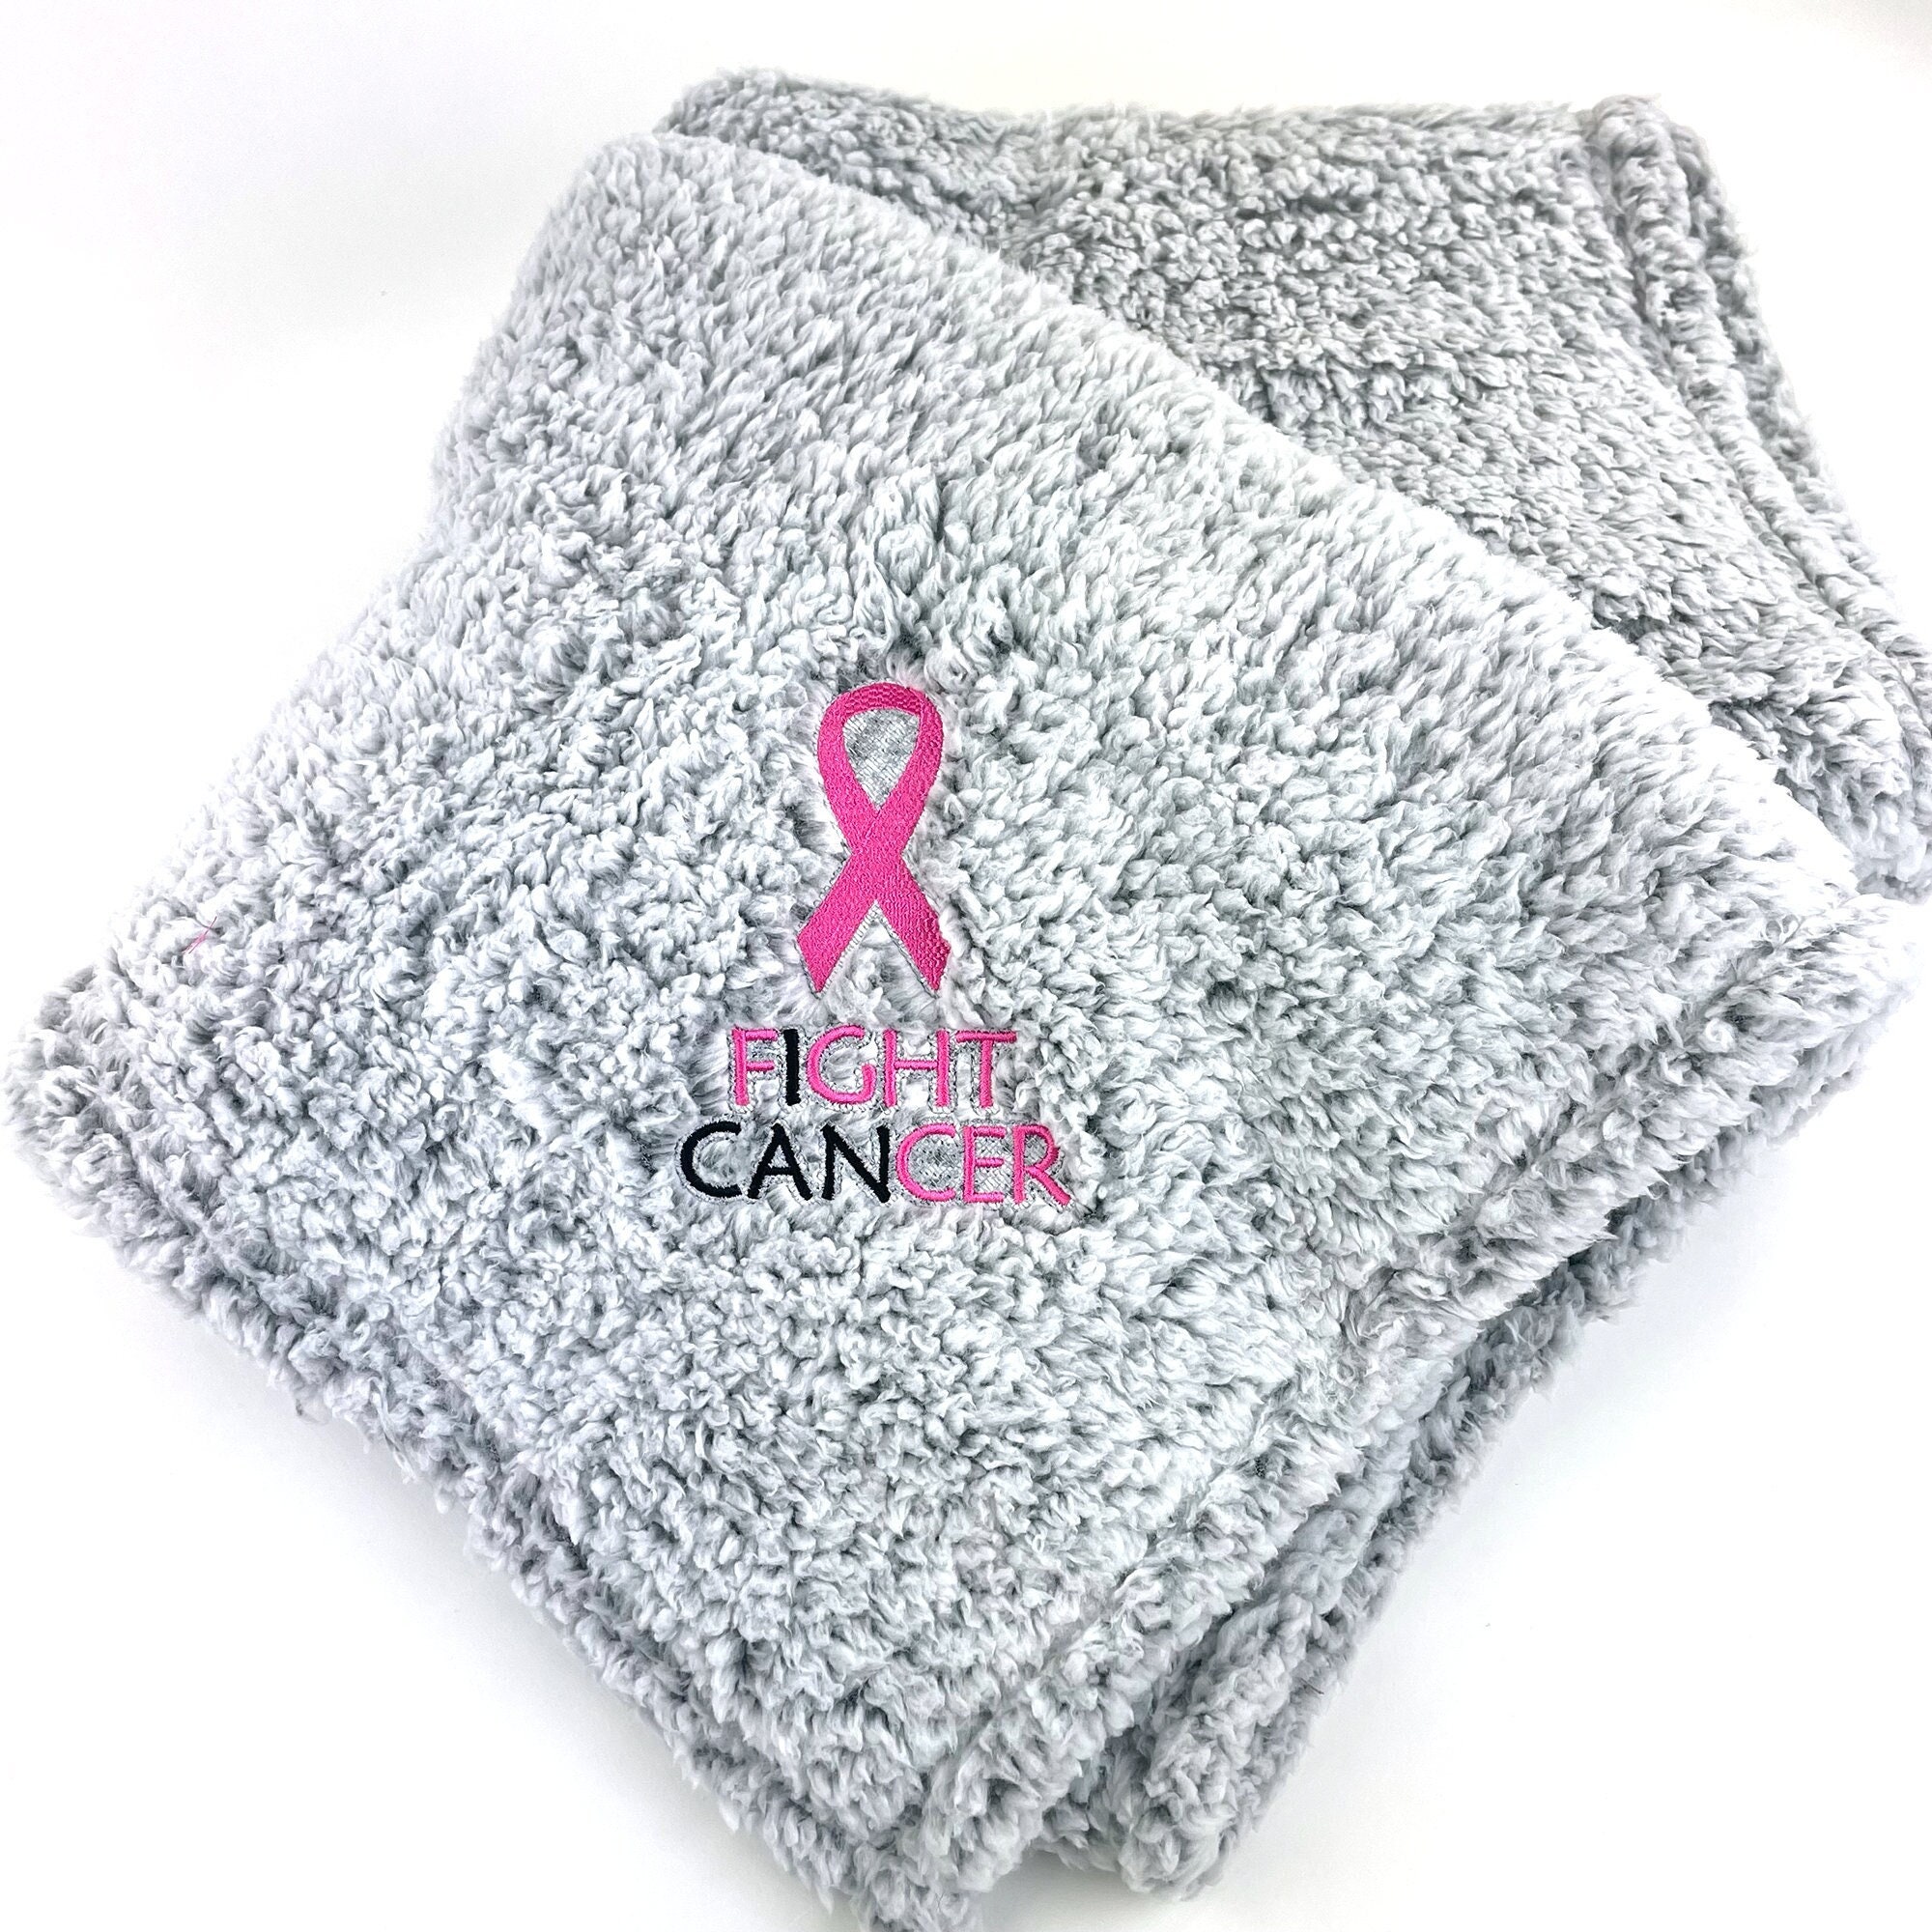 Chemo Blanket